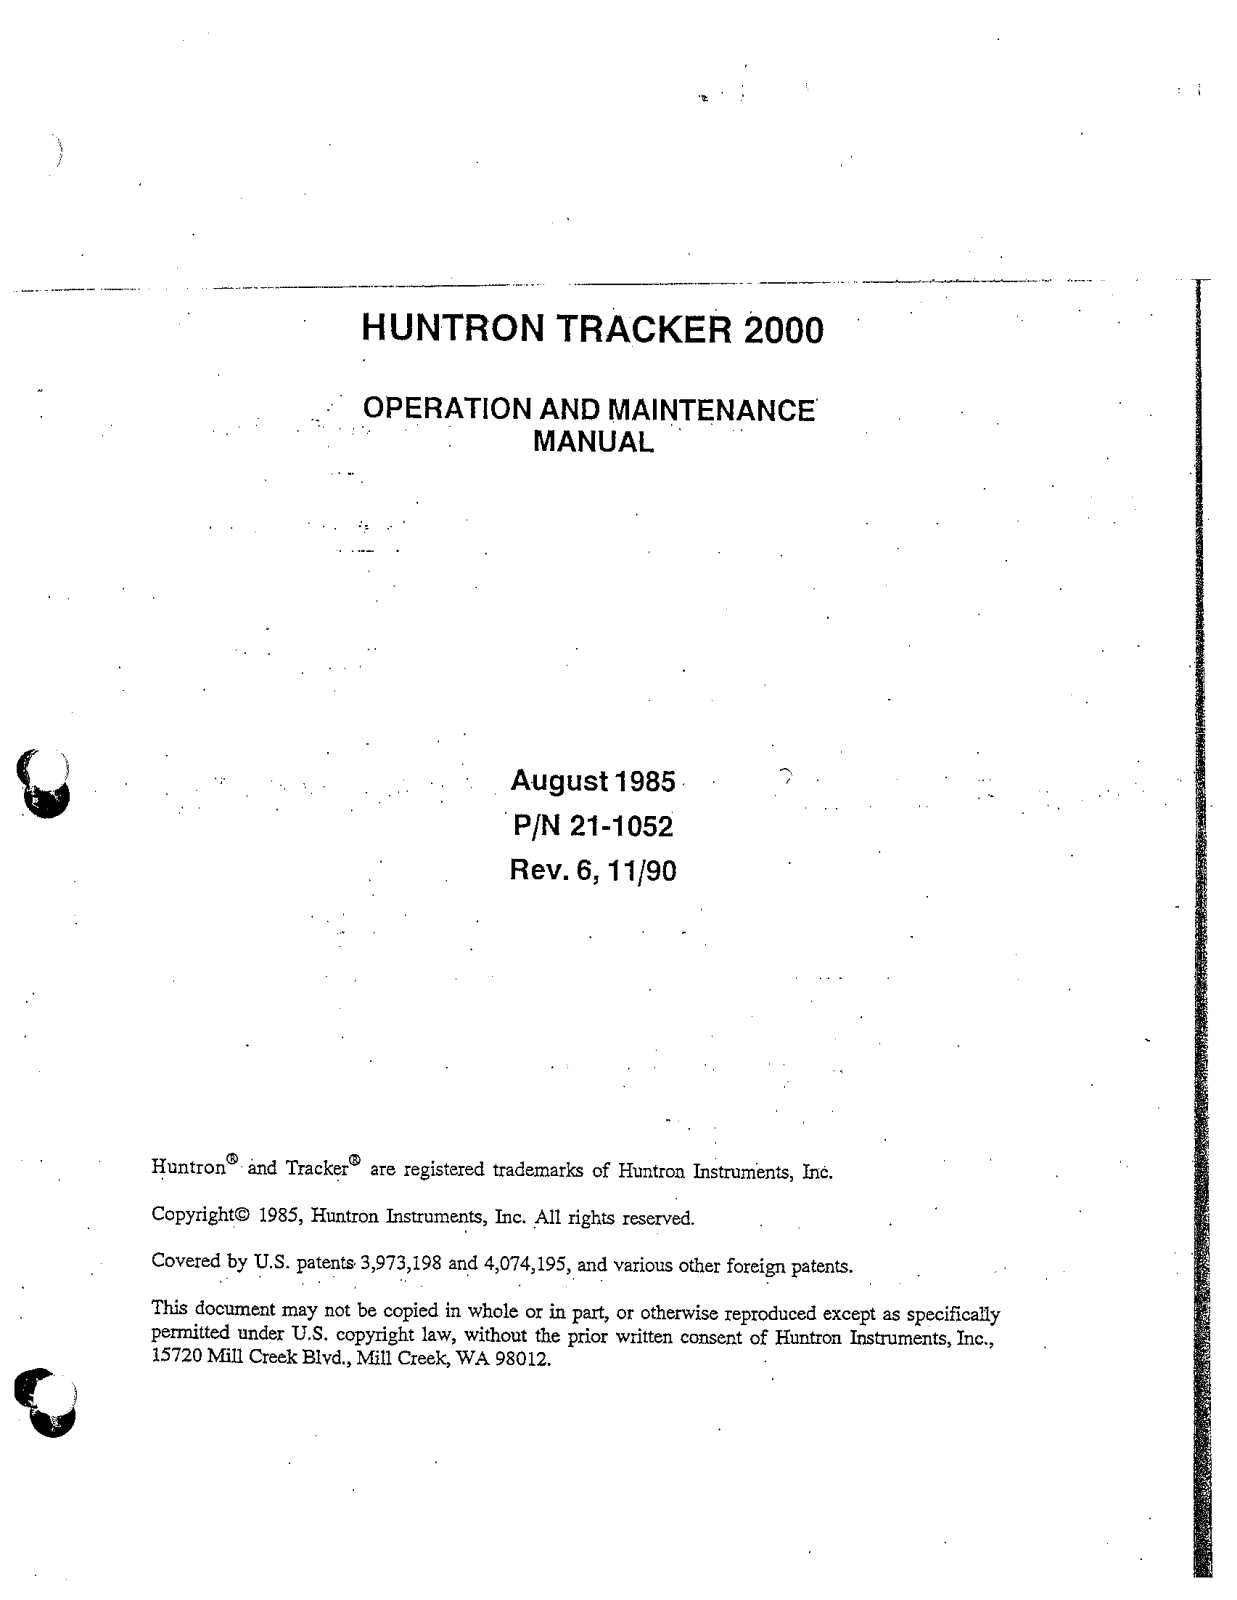 Huntron Instruments 2000 Service manual